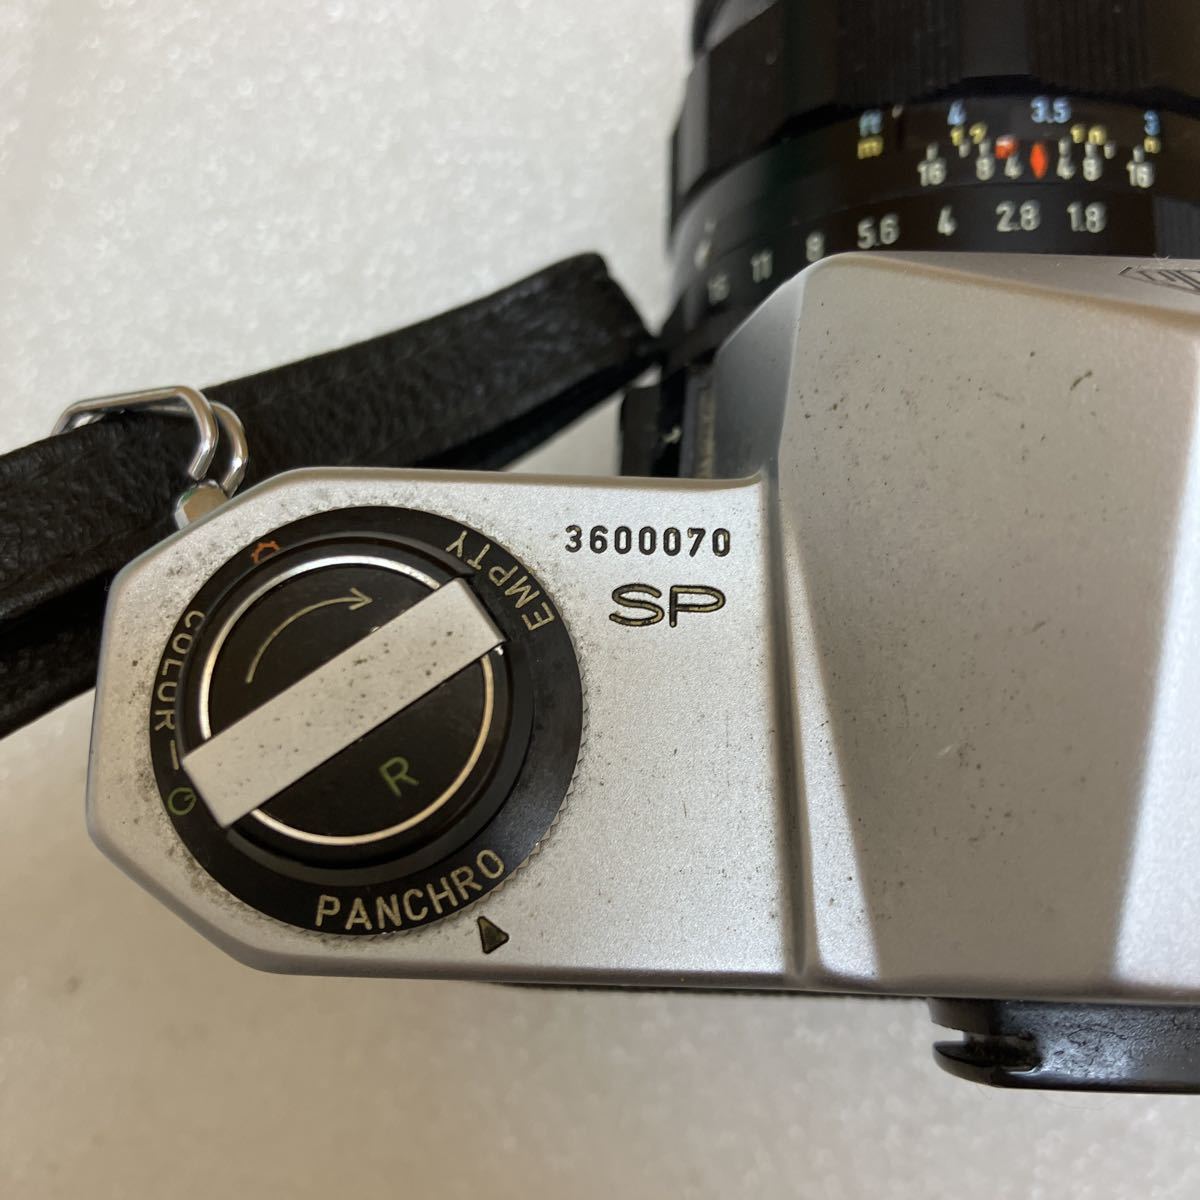 XL8809 SPOTMATIC SP フィルム一眼カメラ/Super-Multi-Coated TAKUMAR 1:1.4/50 ジャンク シャッターok_画像6